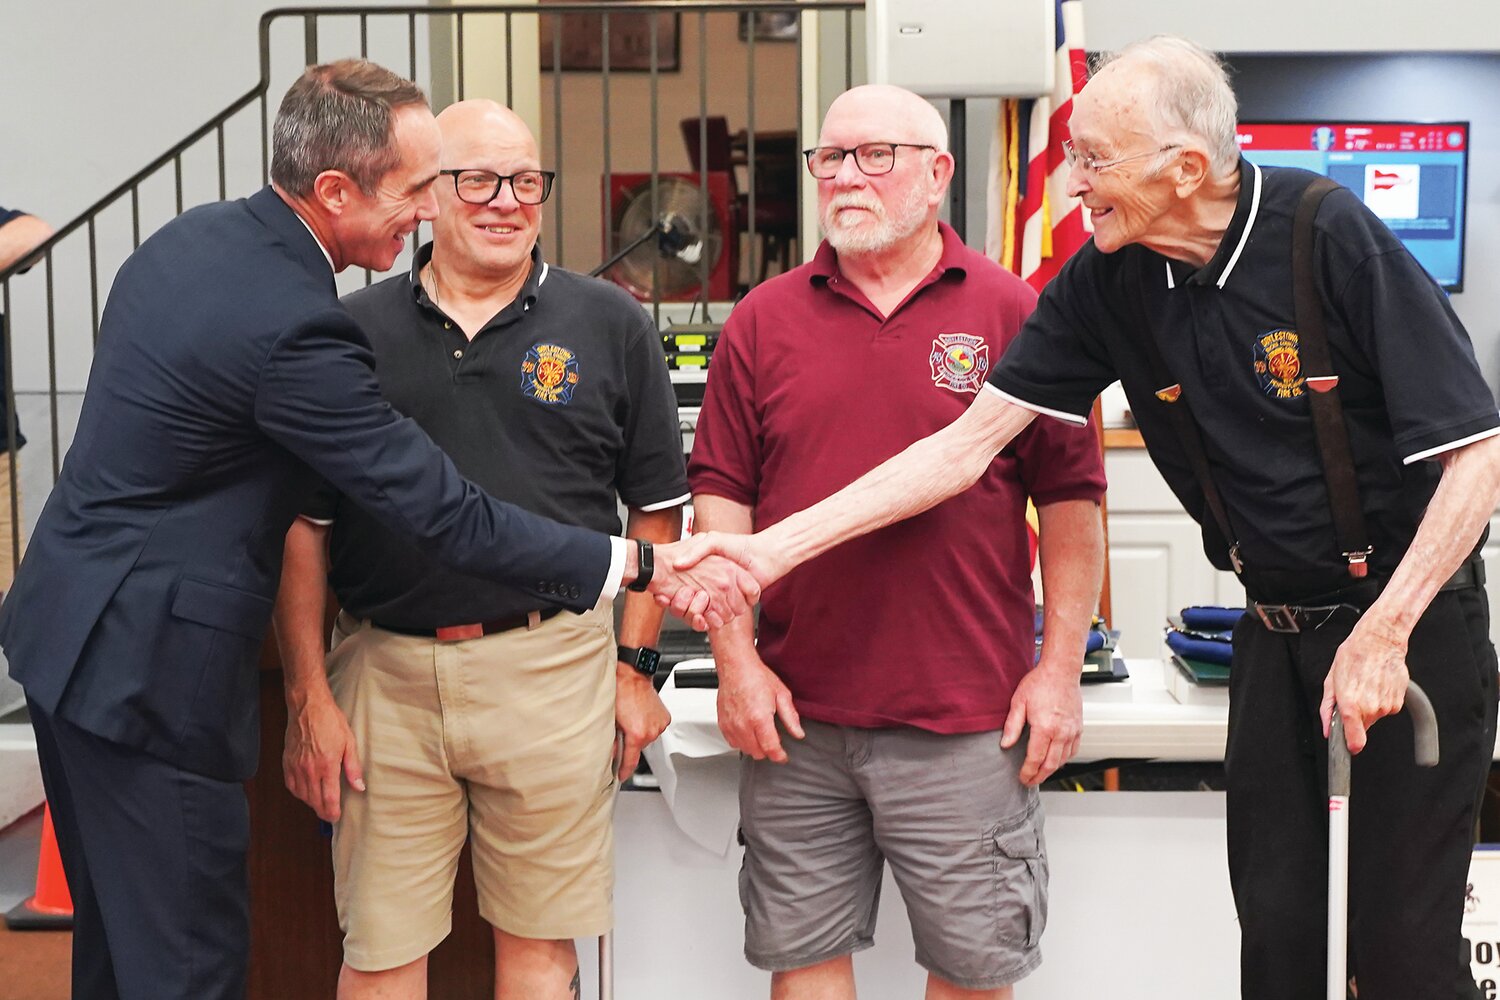 State Sen. Steve Santarsiero, D-10, shakes the hand of Clayton Long, a life member of Doylestown Fire Co. #1, on June 7.